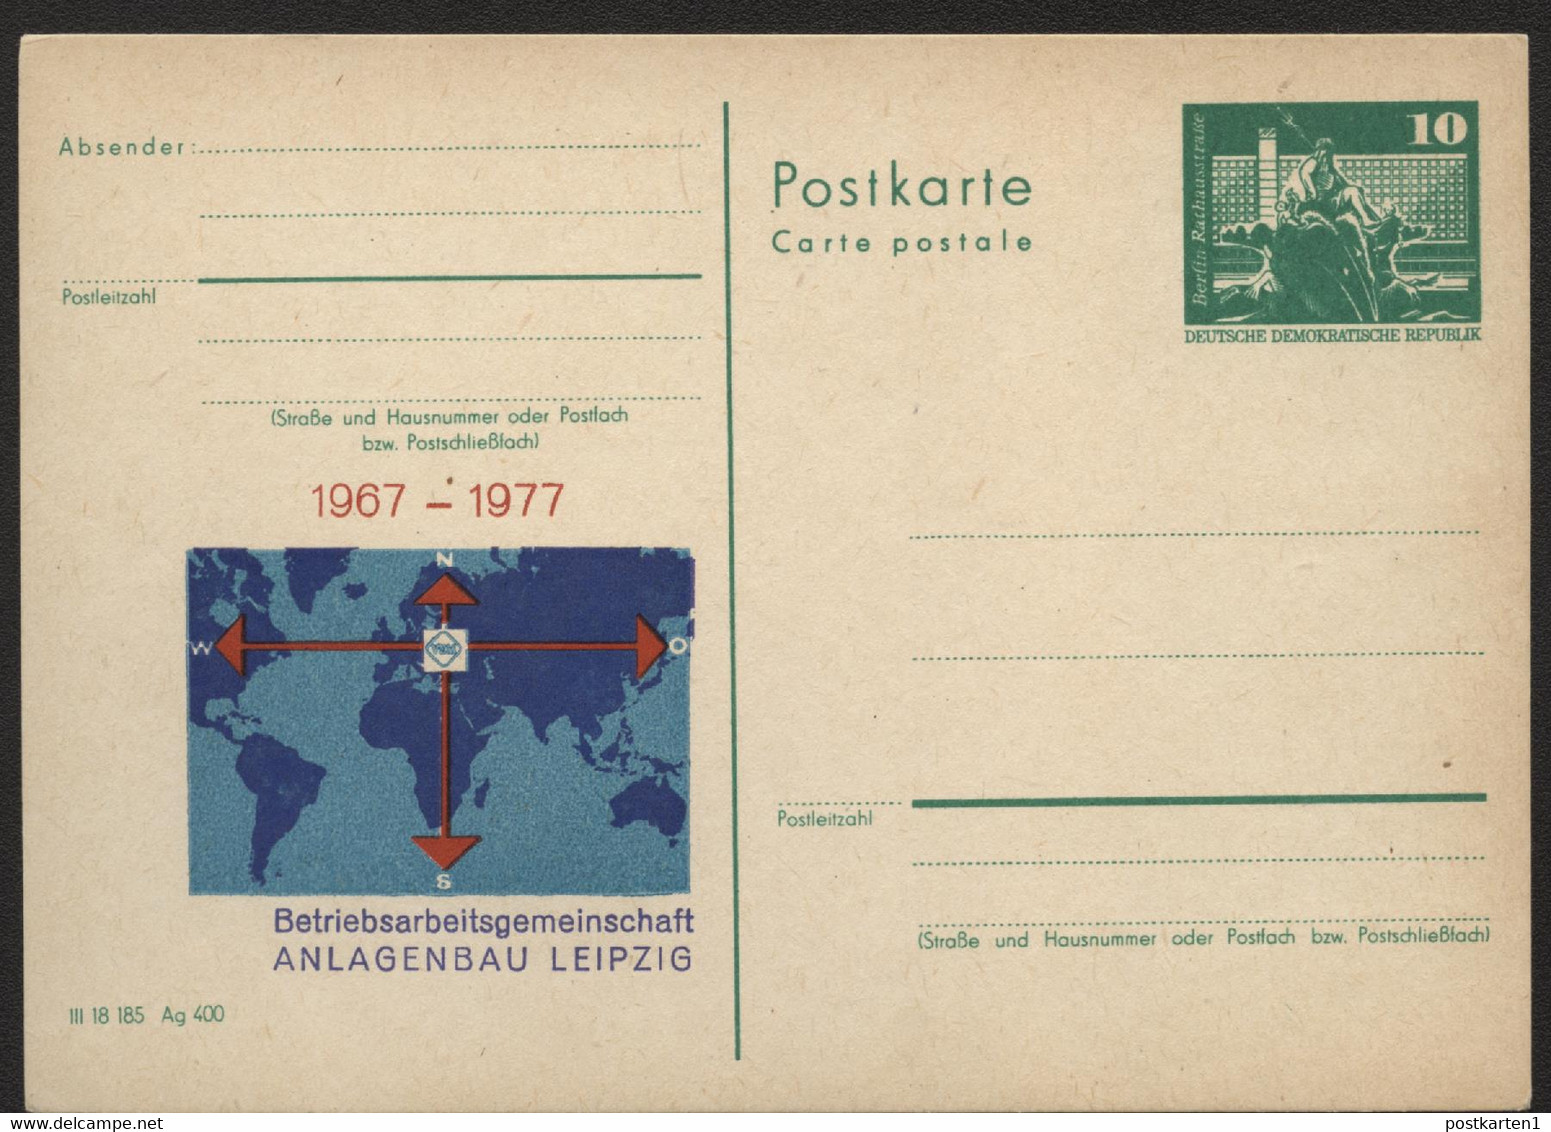 Postkarte P79 C45a ANLAGENBAU LEIPZIG Postfrisch 1977 - Private Postcards - Used